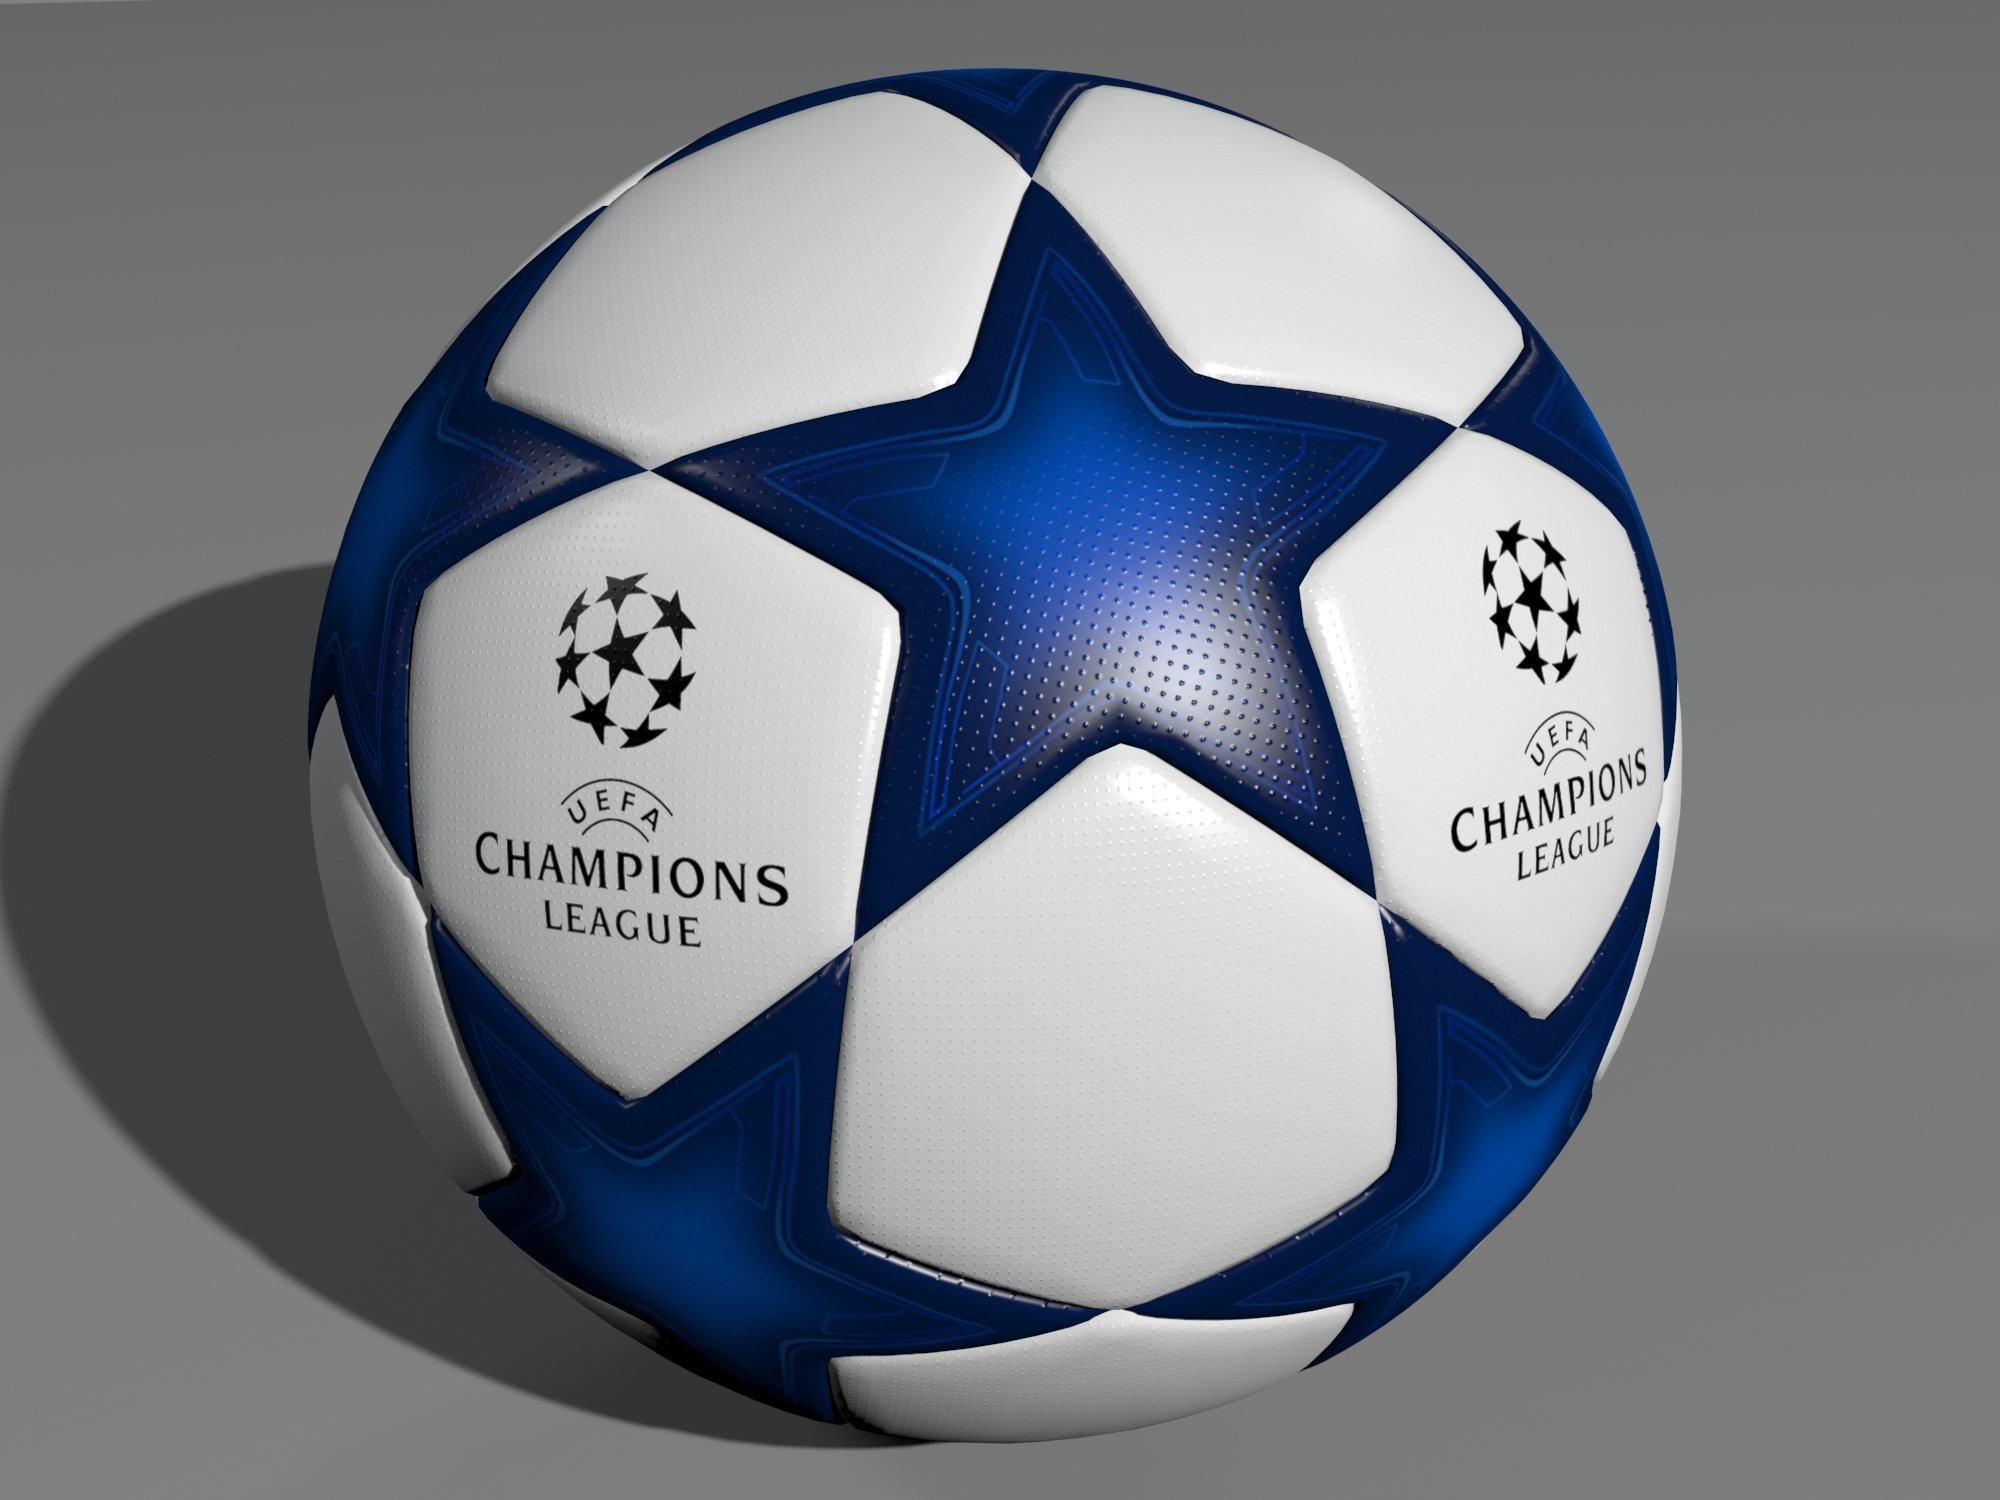 new uefa champions league ball